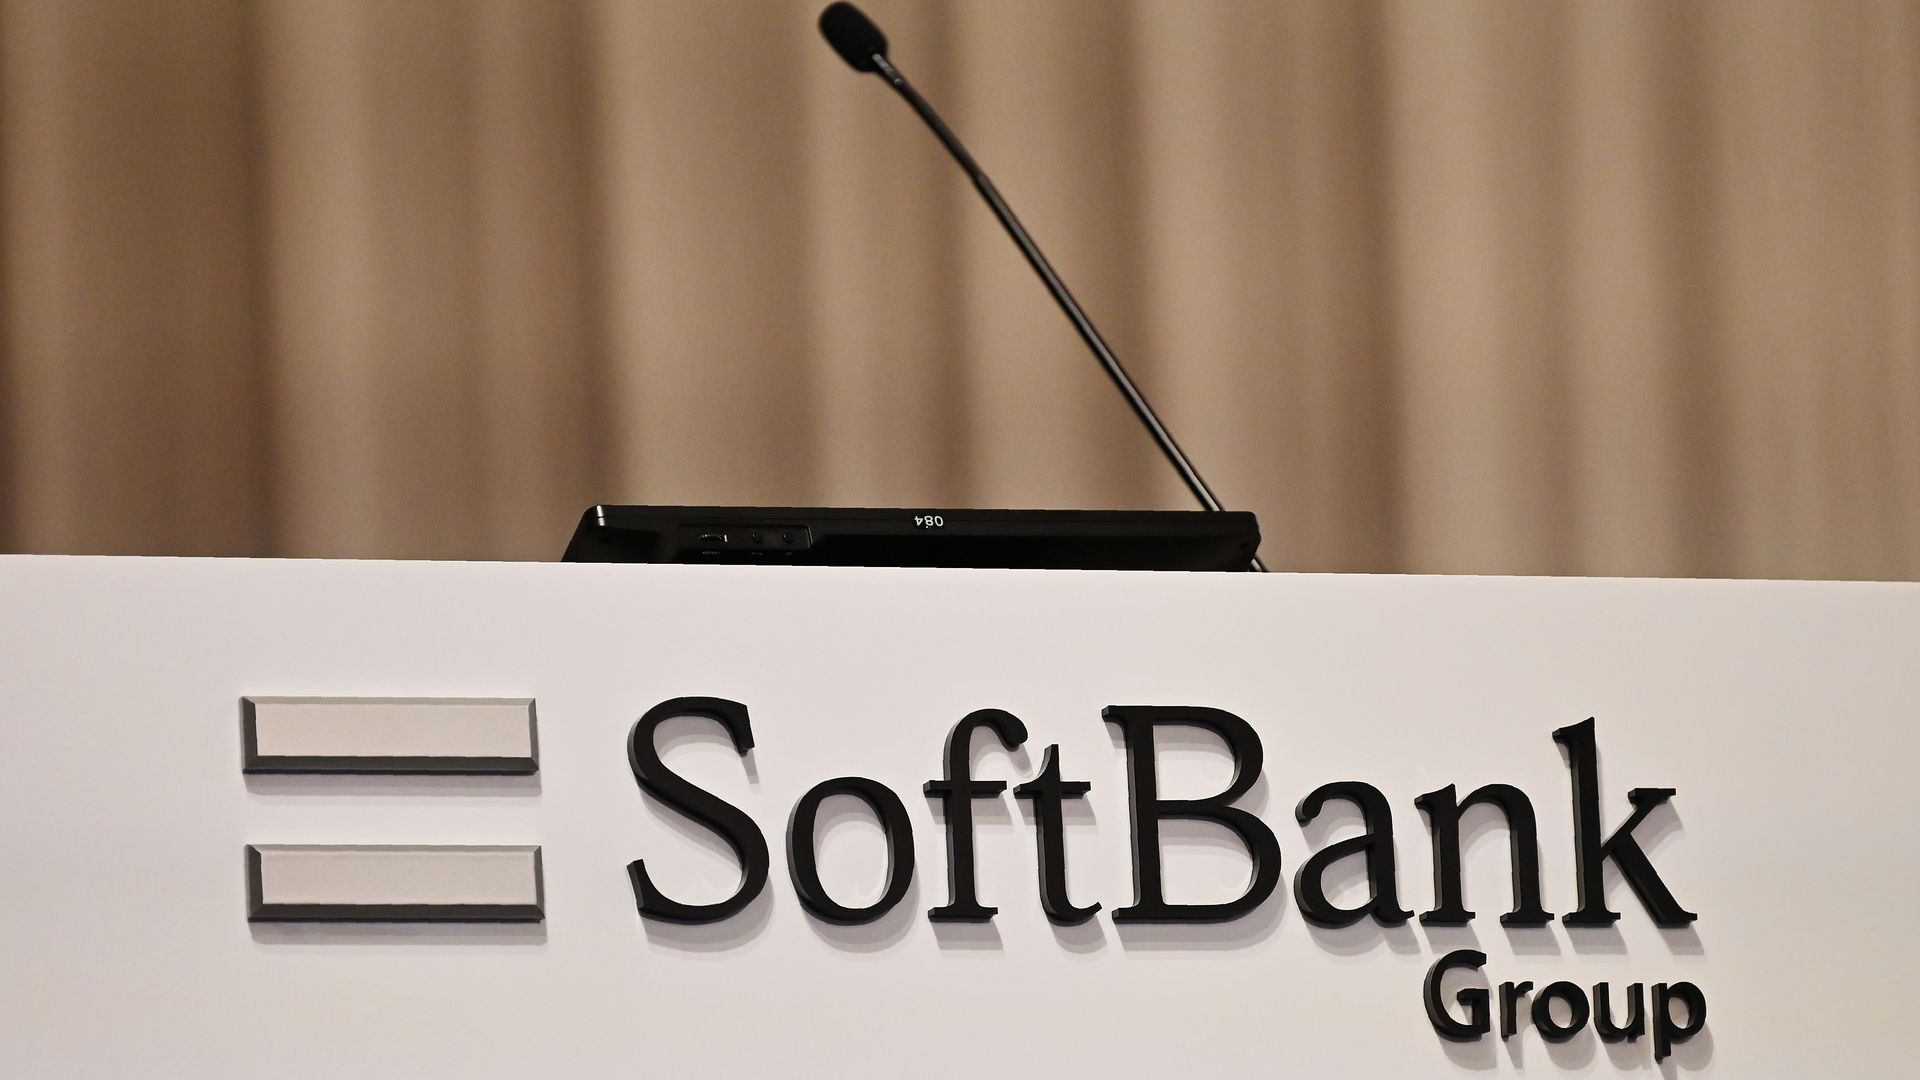 The SoftBank Group logo.